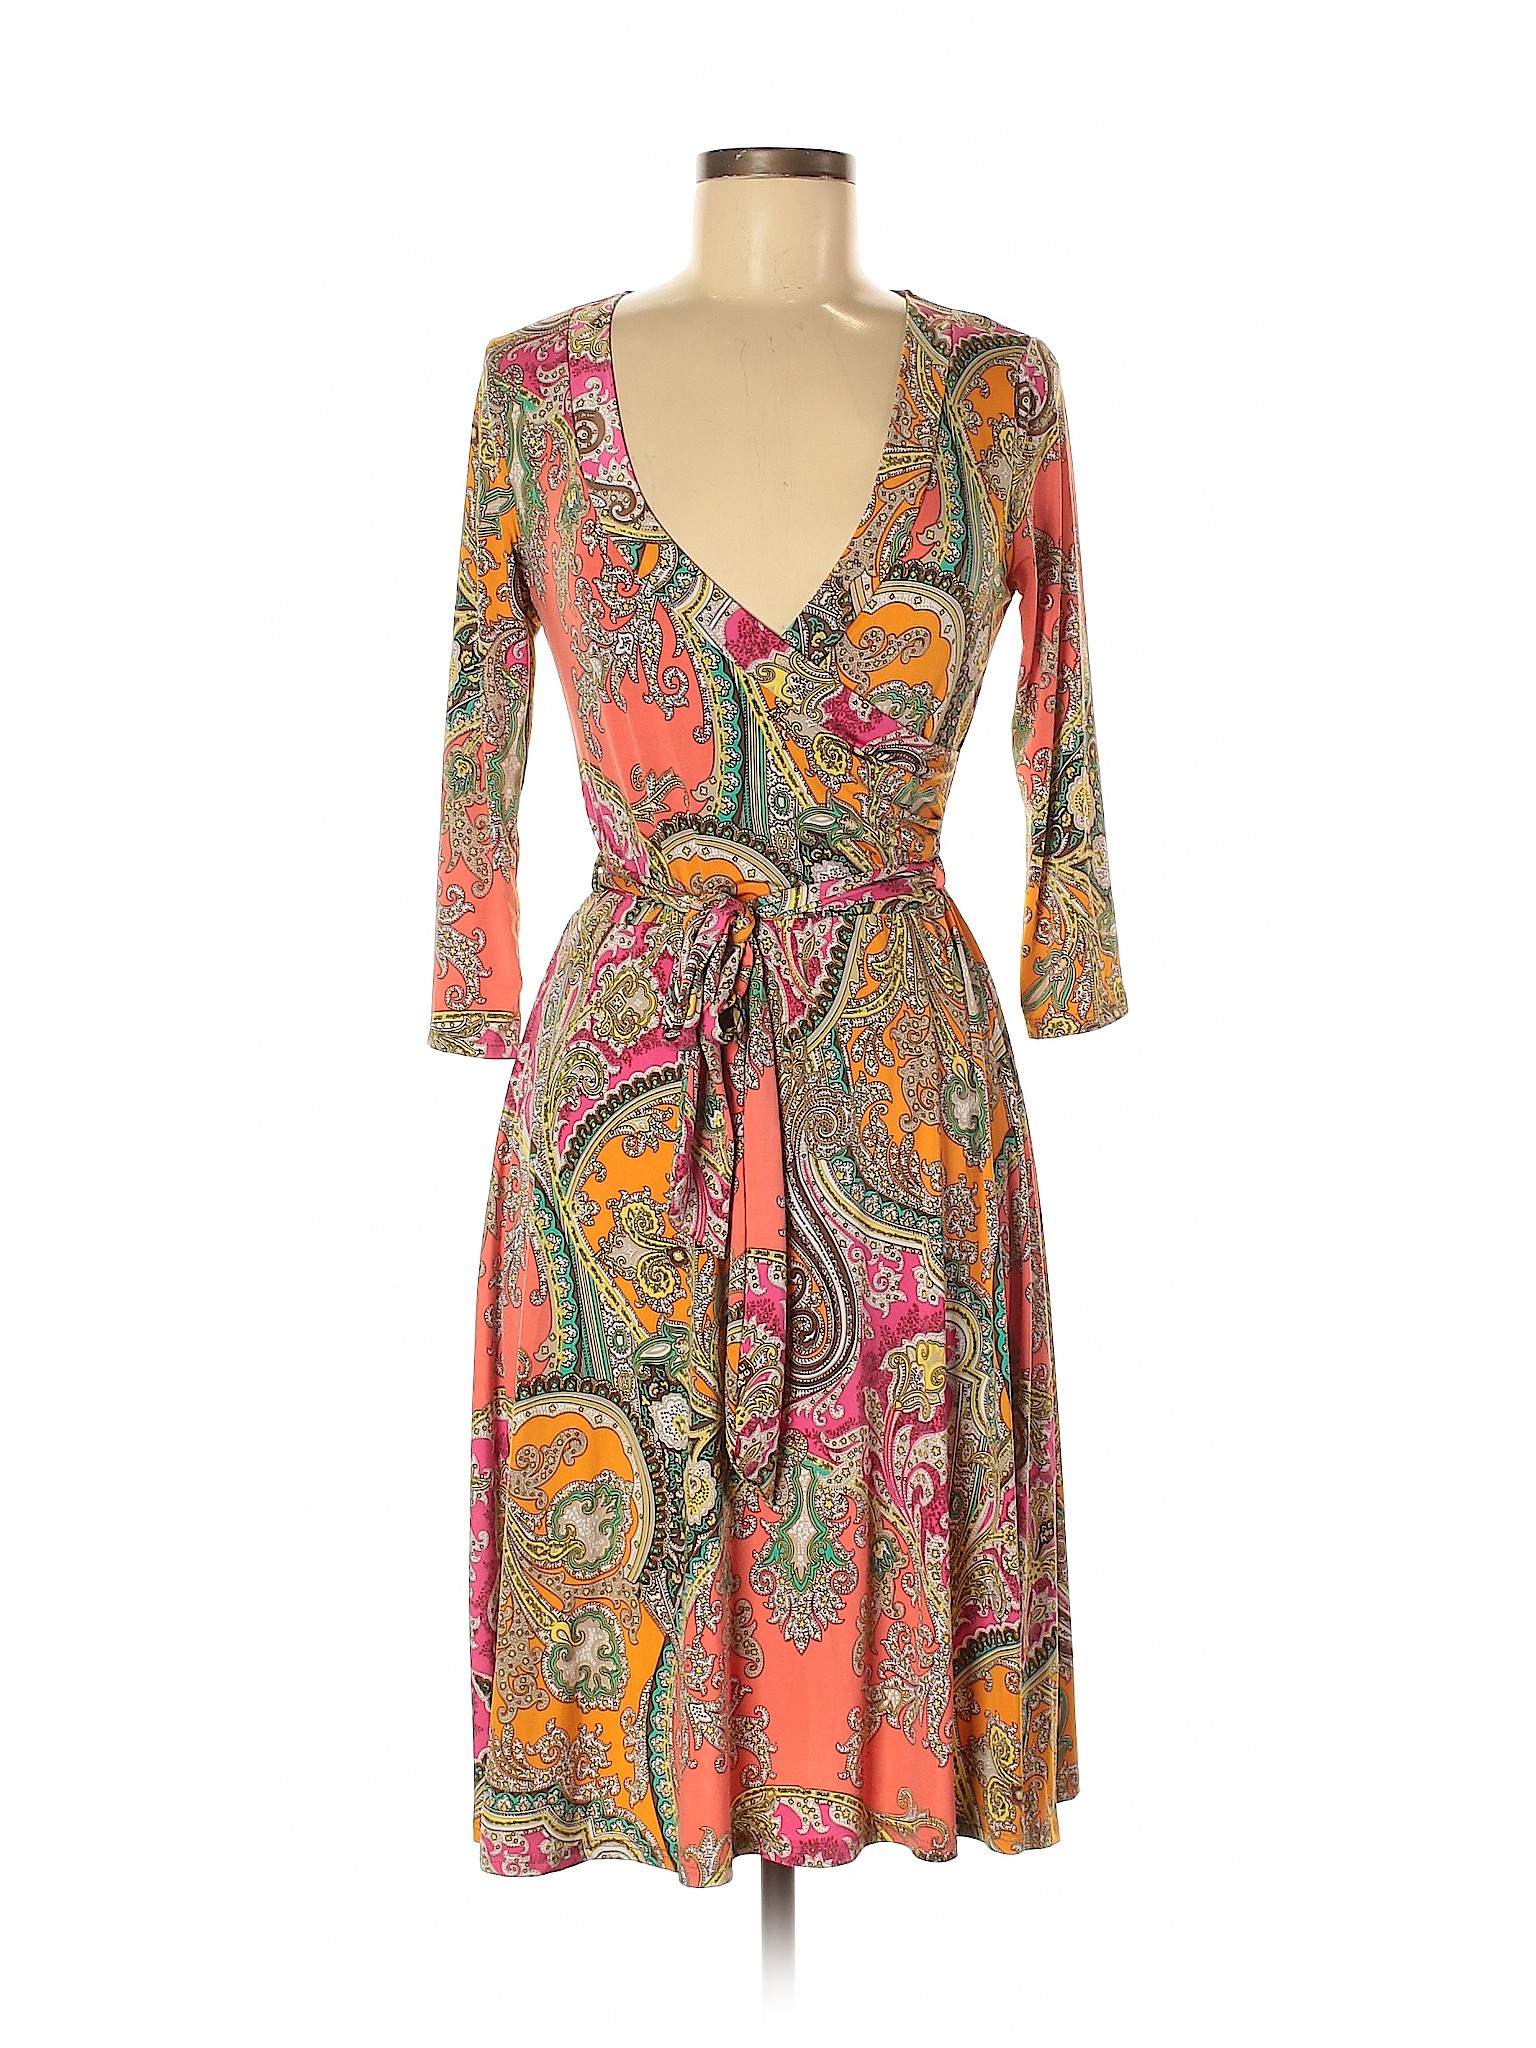 Janette Fashion John 3:16 Women Orange Casual Dress S | eBay